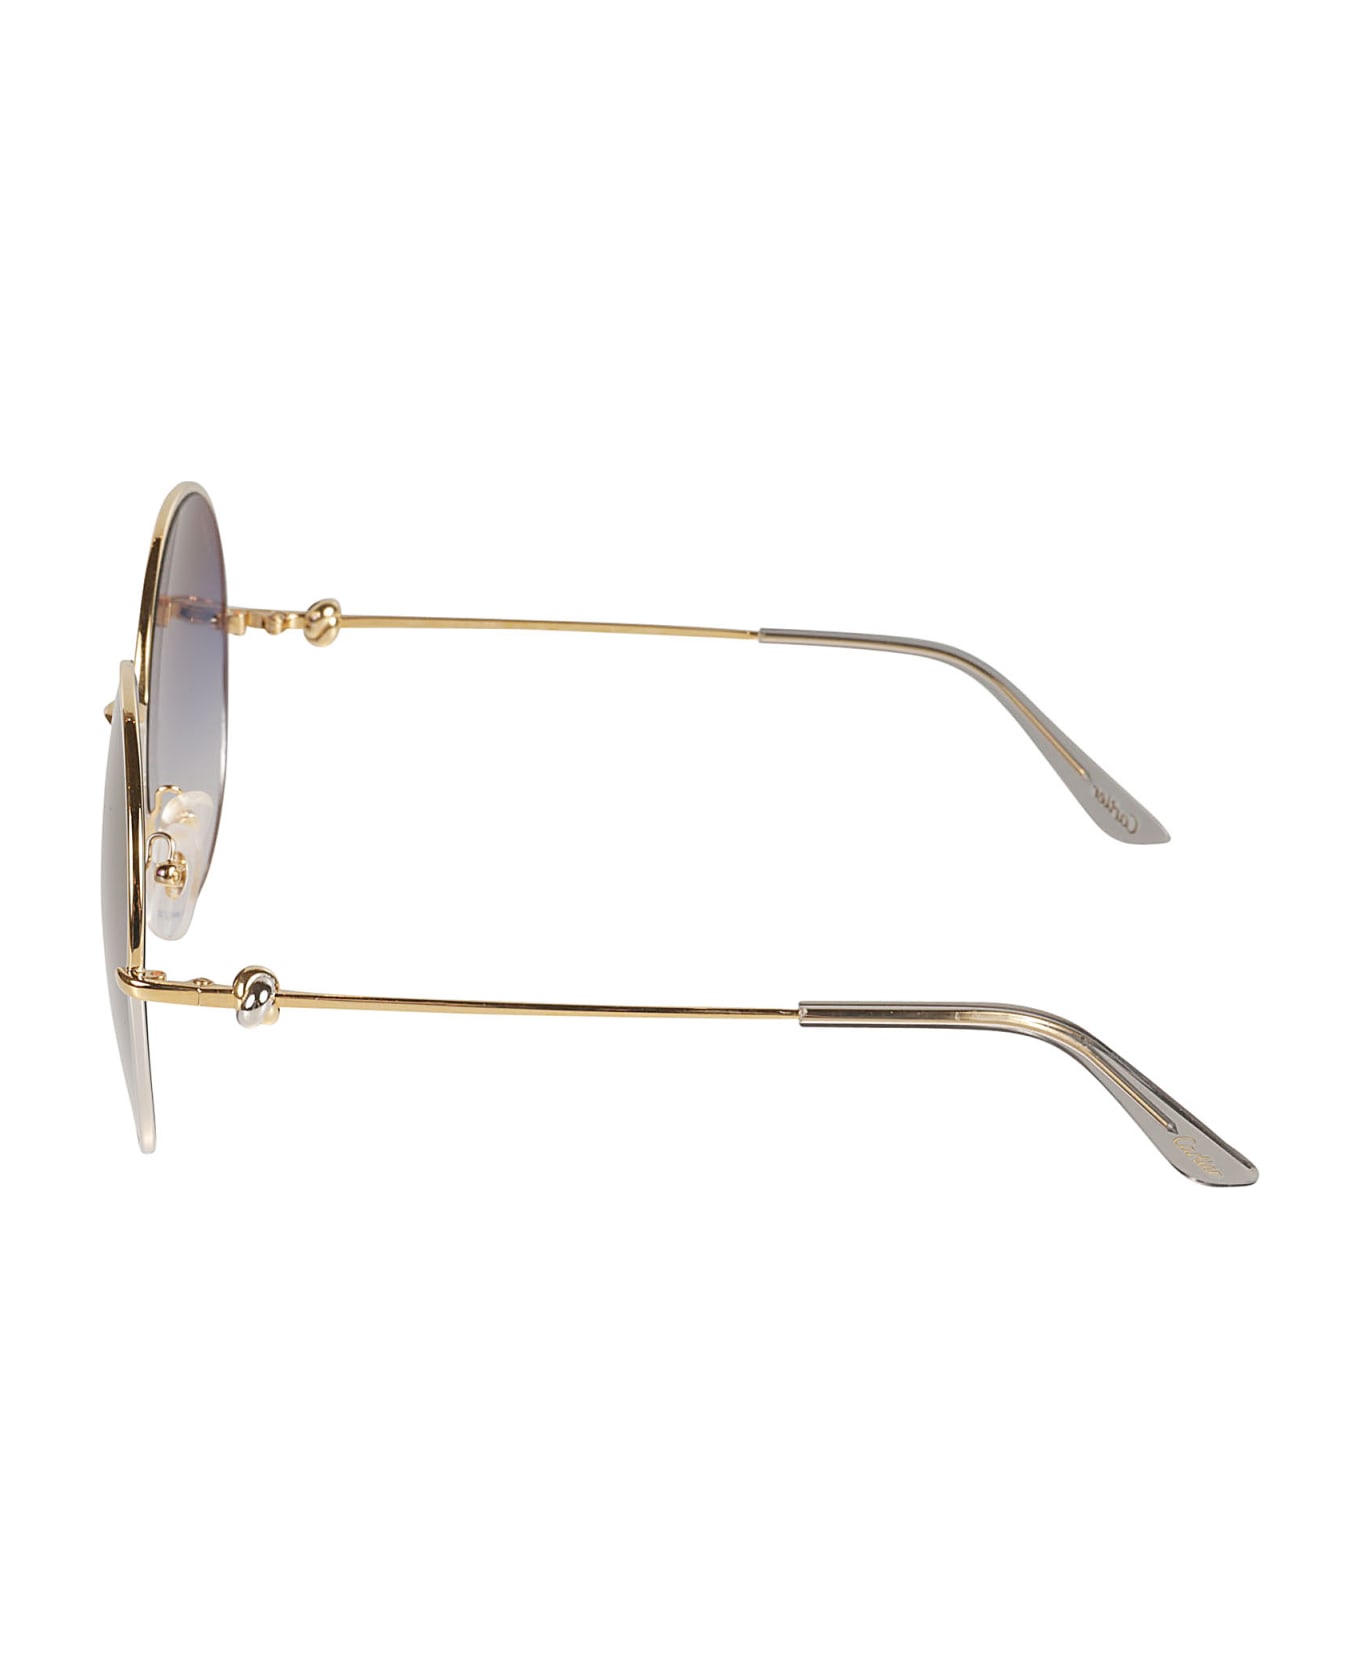 Cartier Eyewear Round Classic Sunglasses - Gold